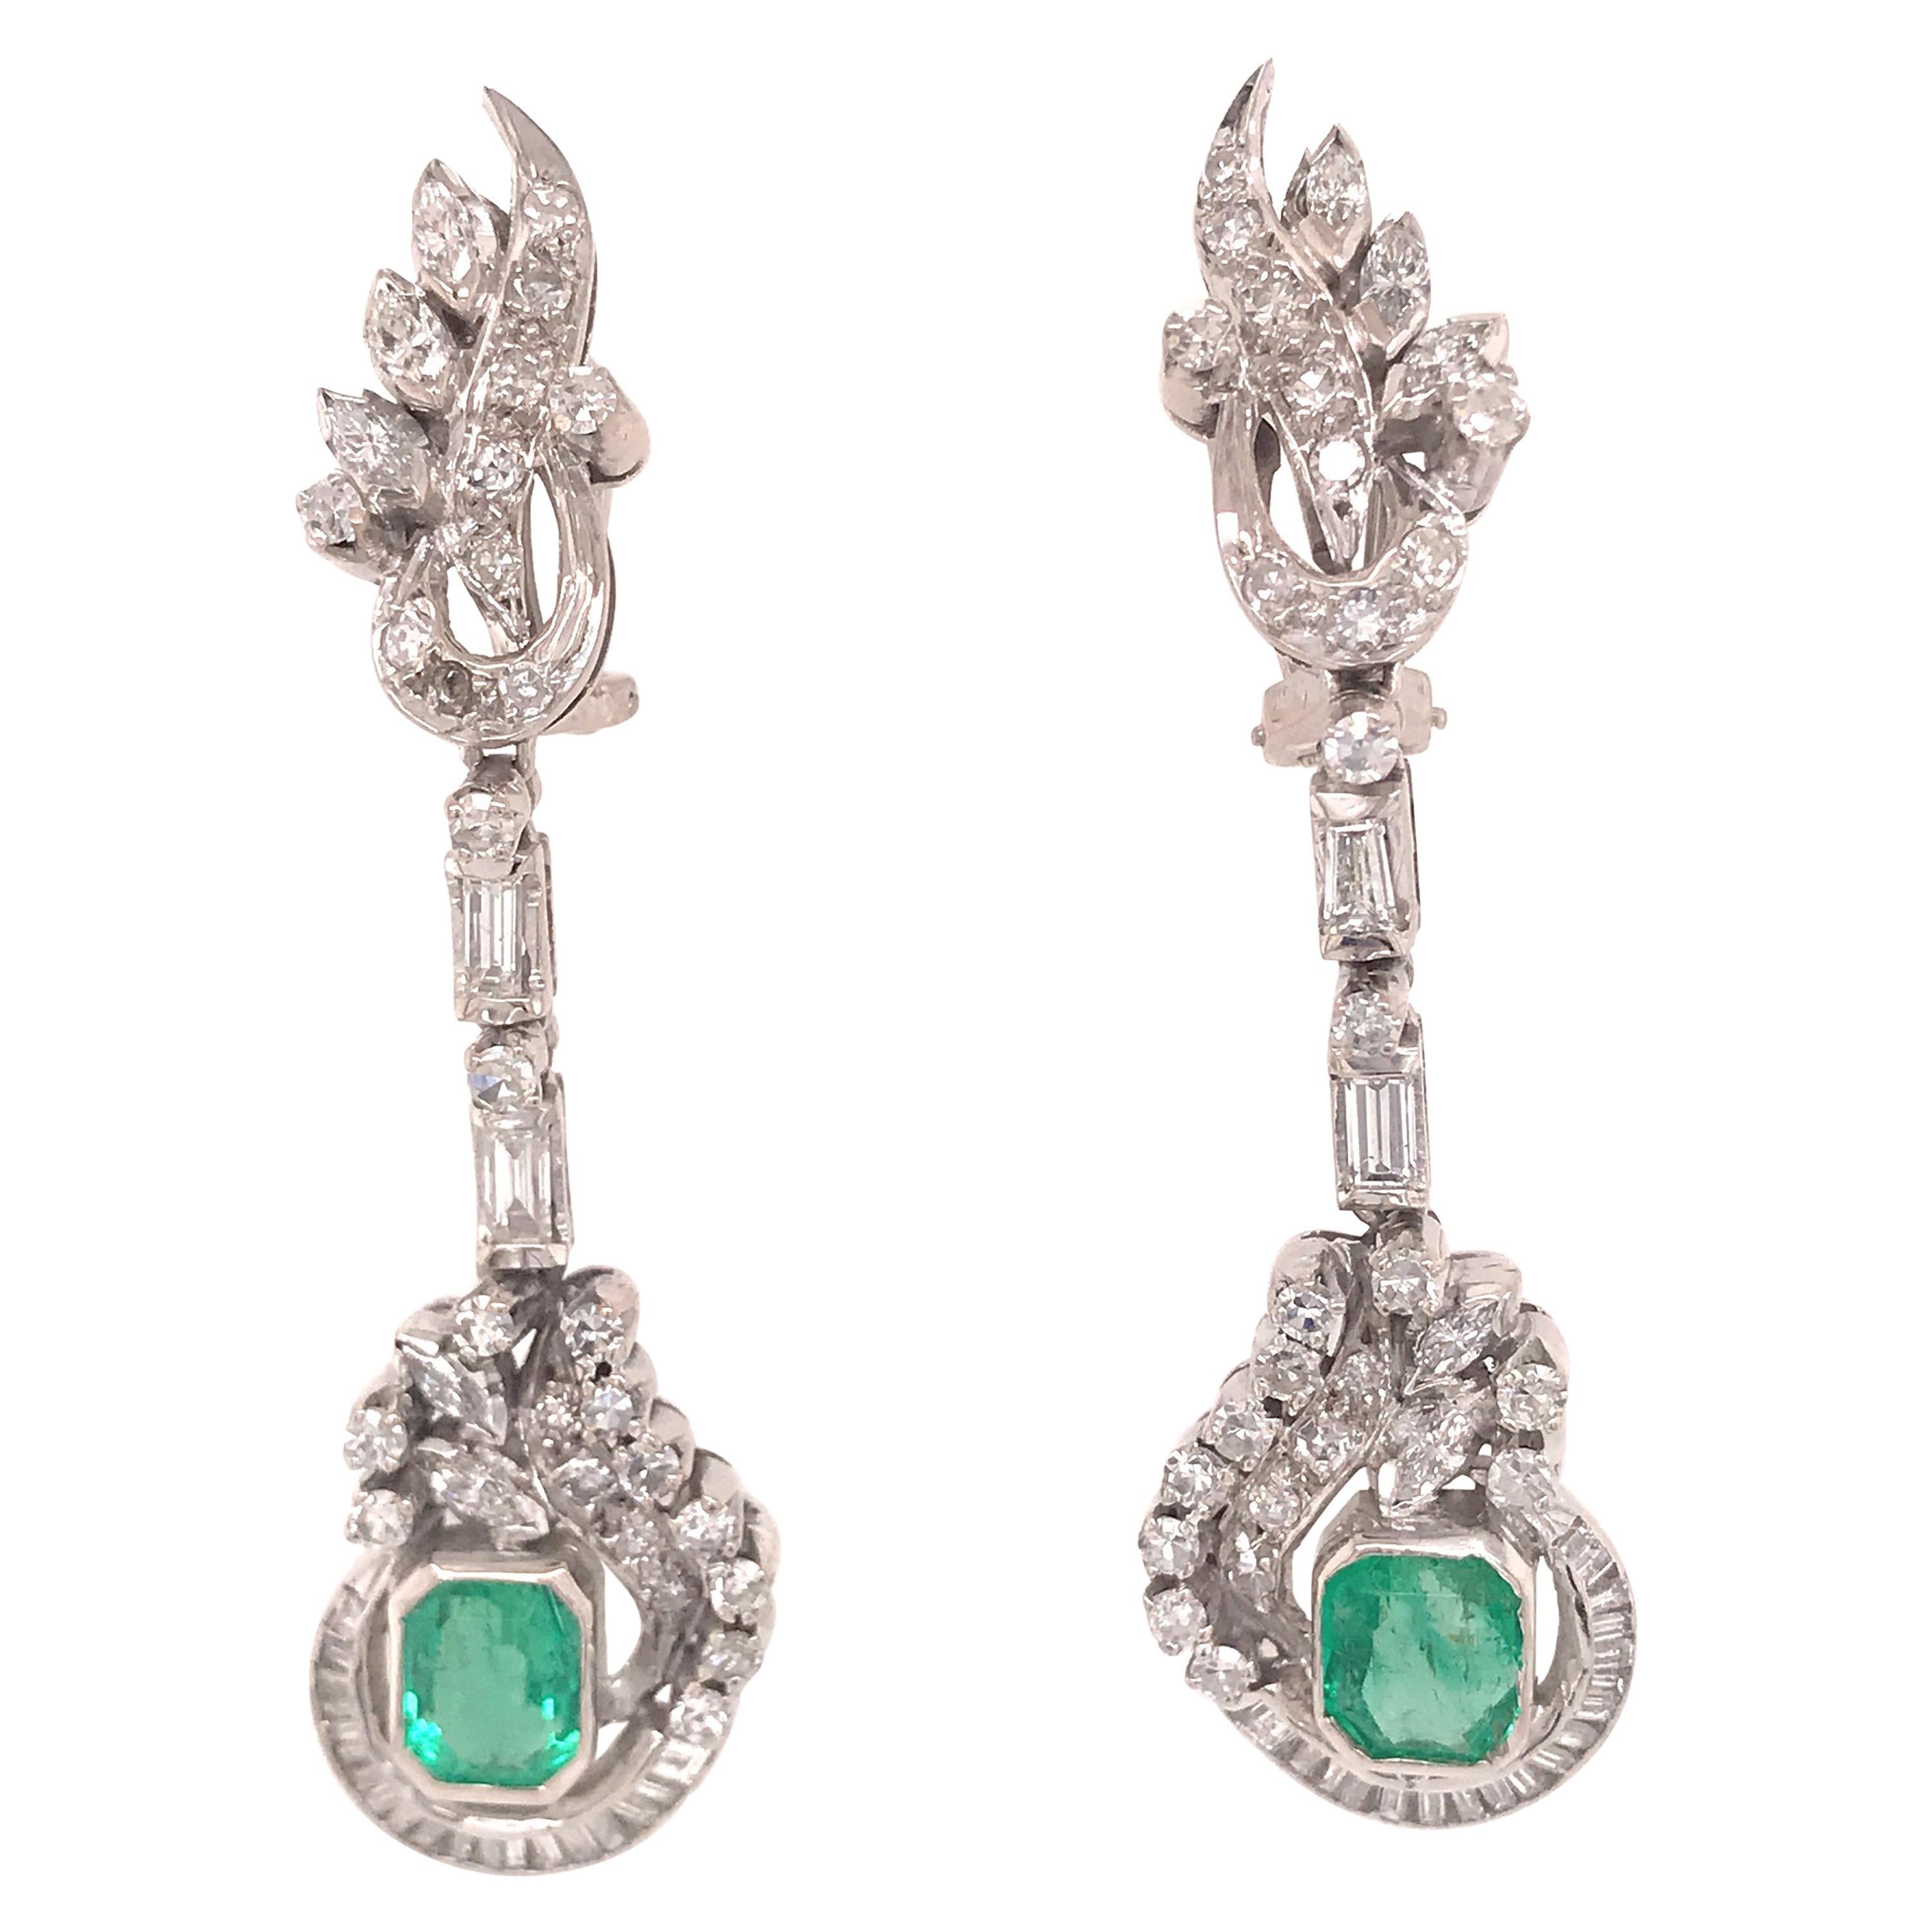 10 Karat Silver Edwardian Diamond and Emerald Earring in White Gold